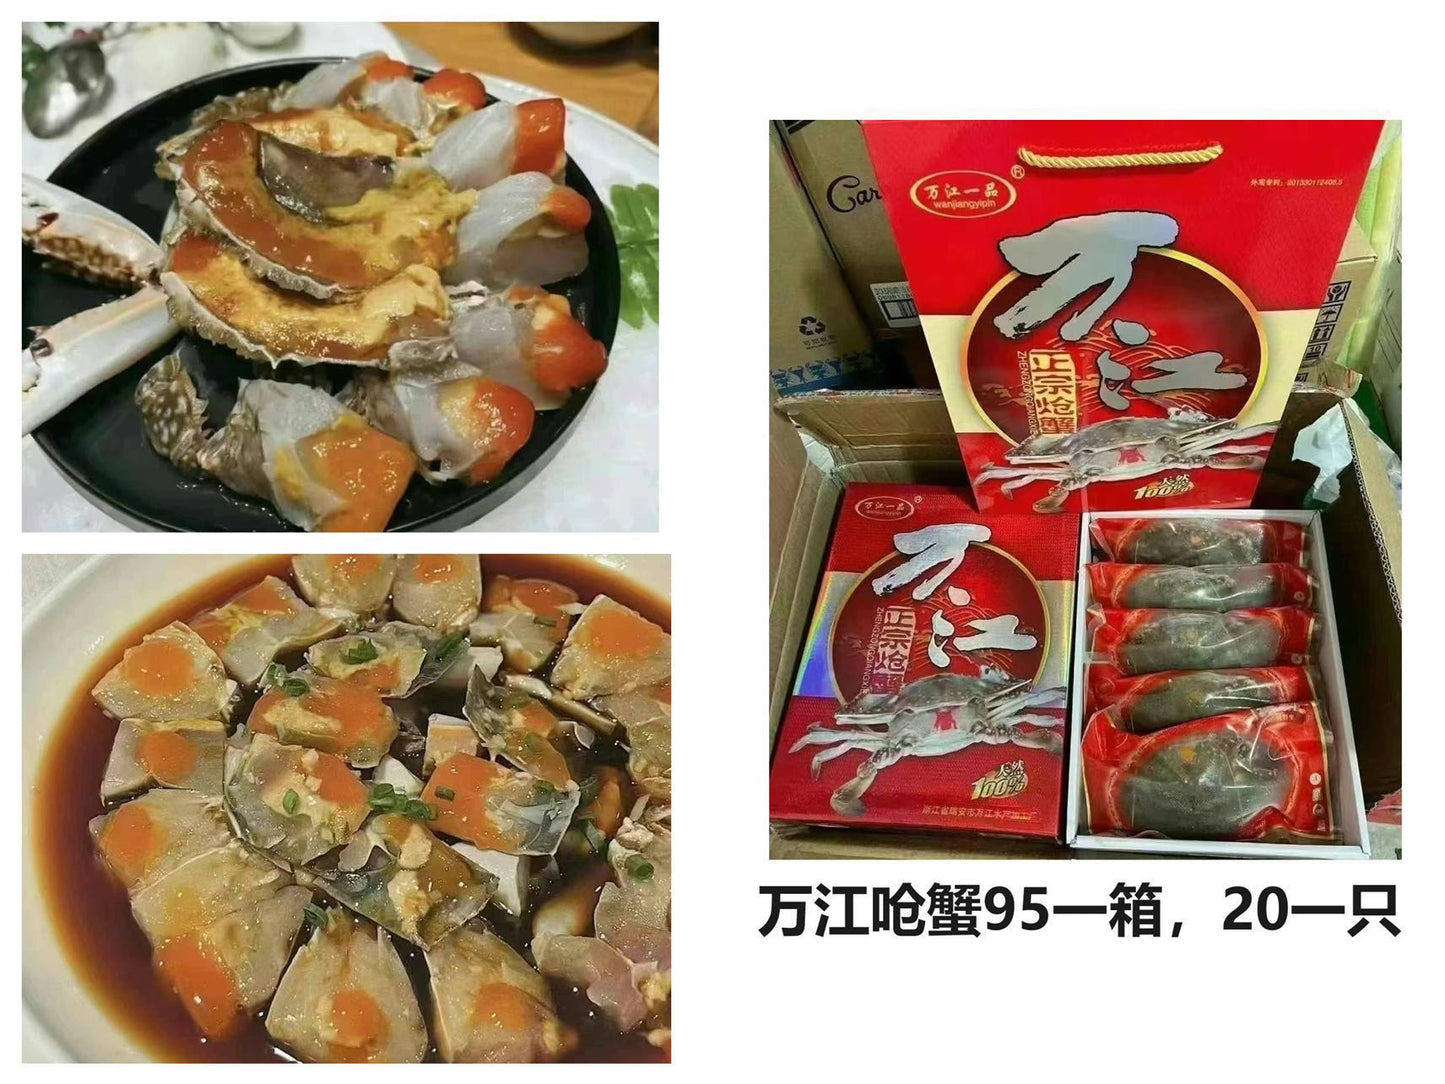 1-Wanjiang choking crab, one